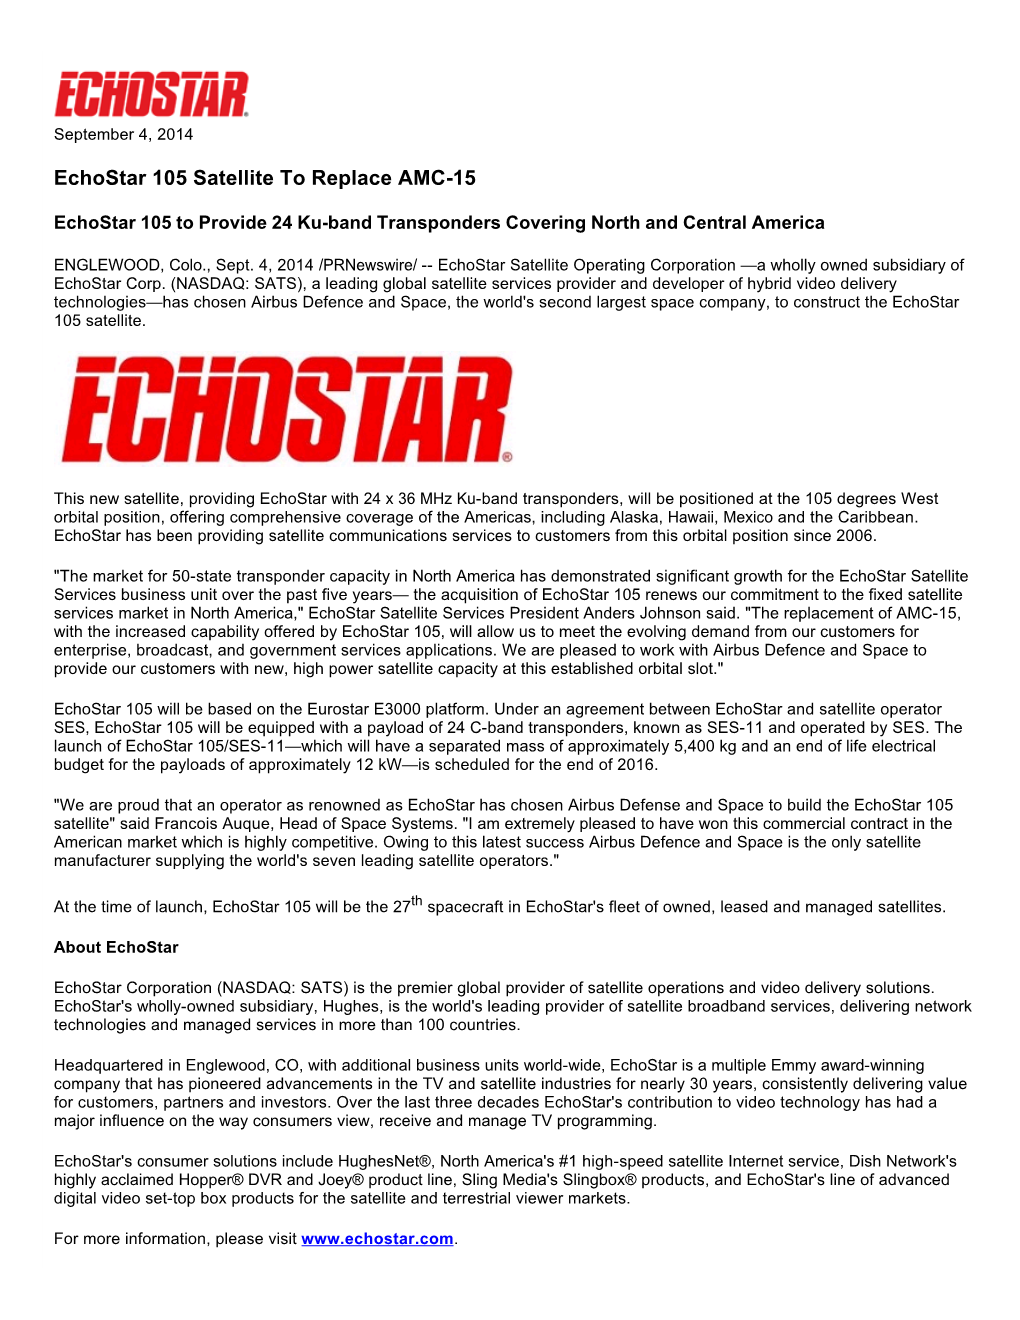 Echostar 105 Satellite to Replace AMC-15